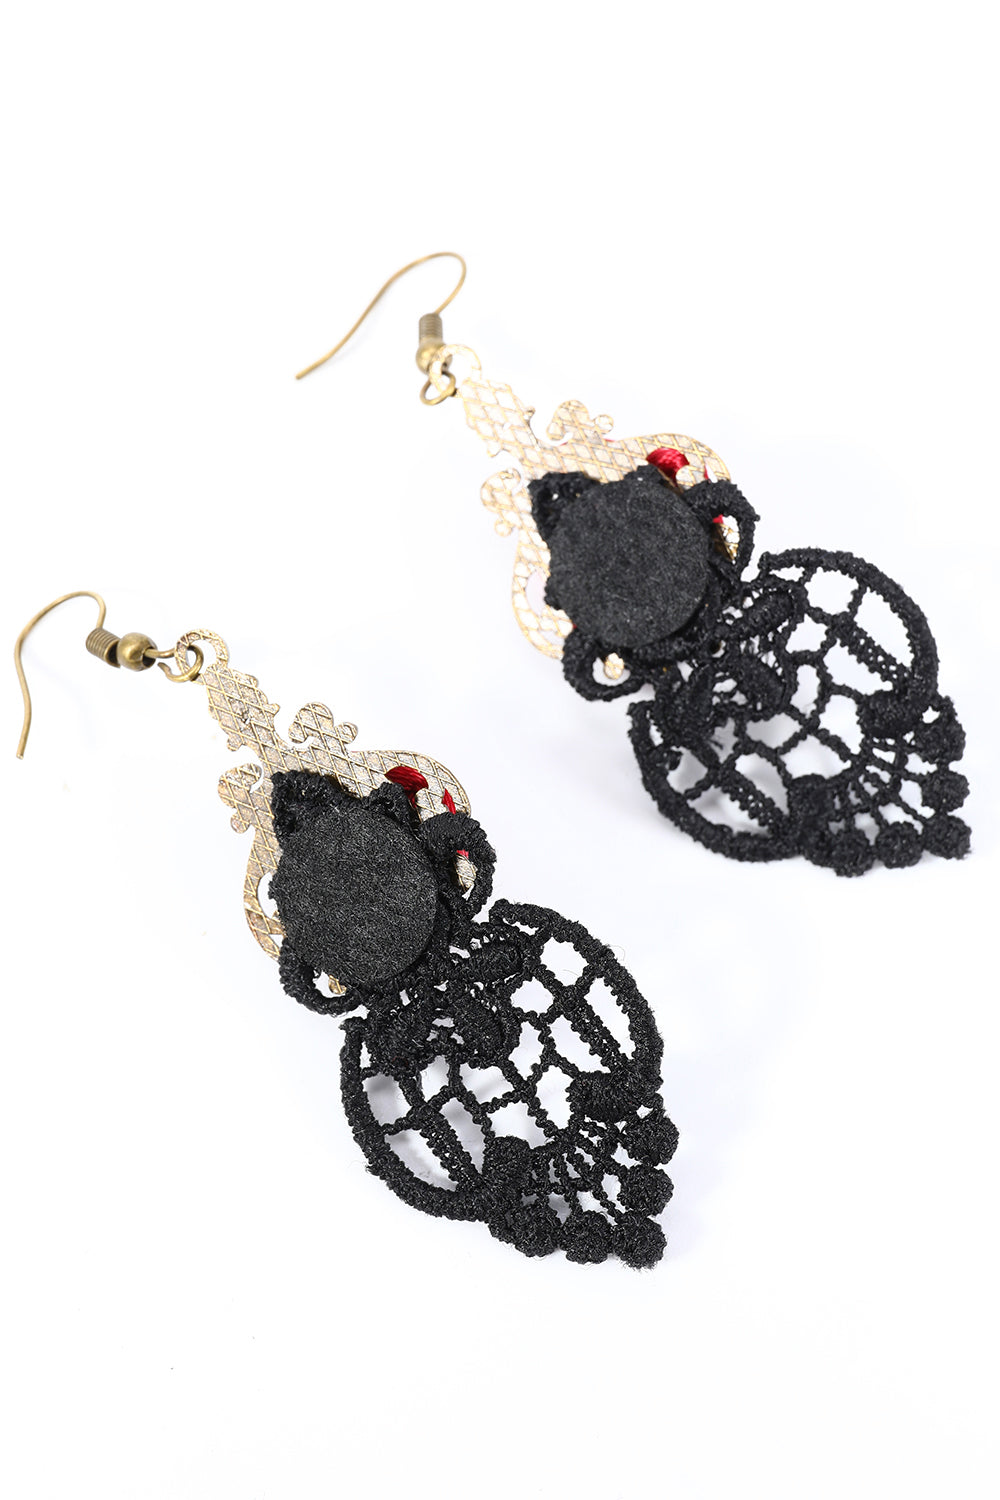 Red and Black Halloween Crochet Drop Earrings